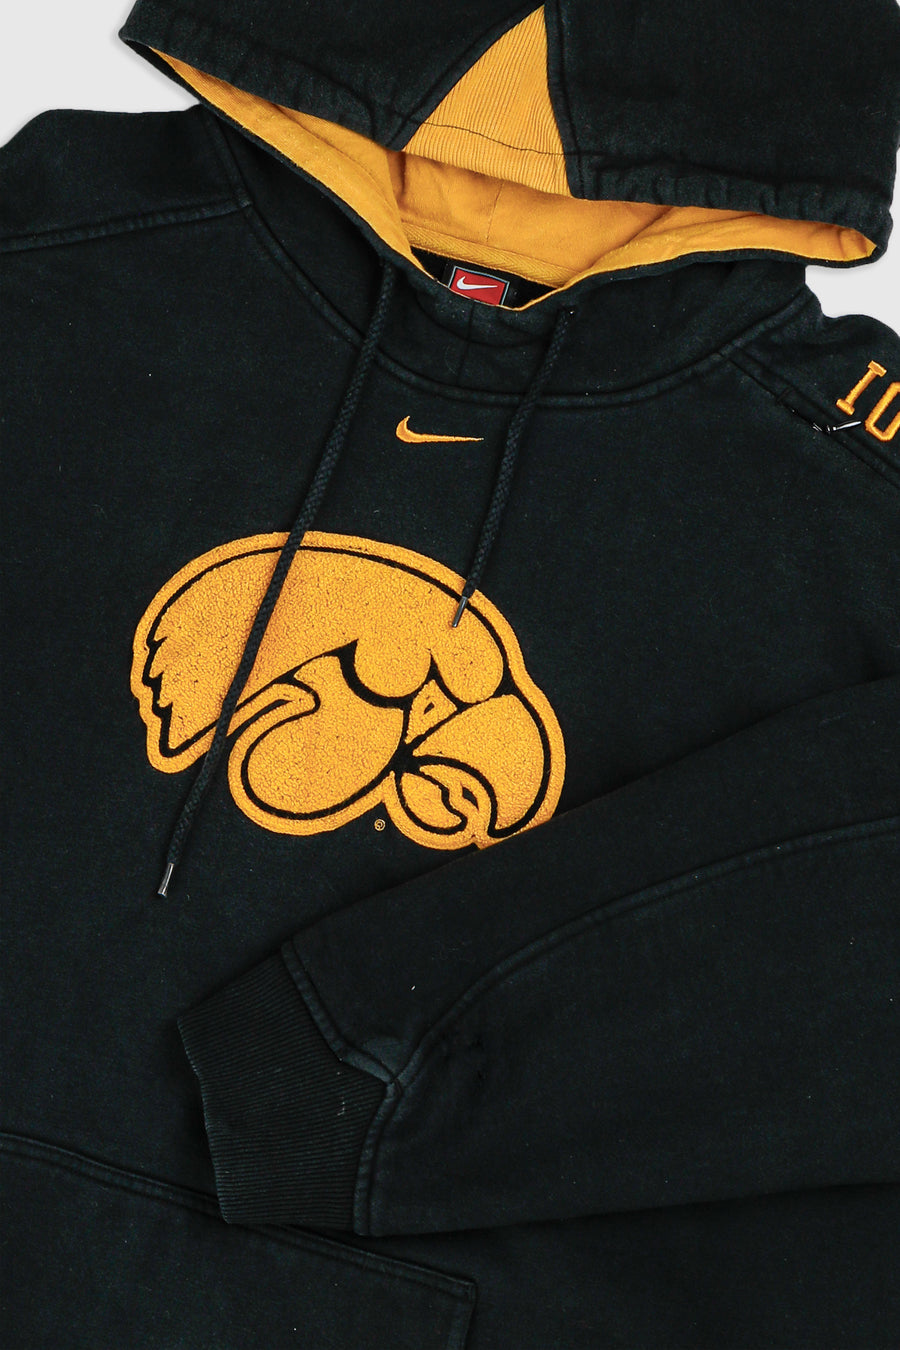 Vintage Nike Iowa Hawkeyes Sweatshirt - XL